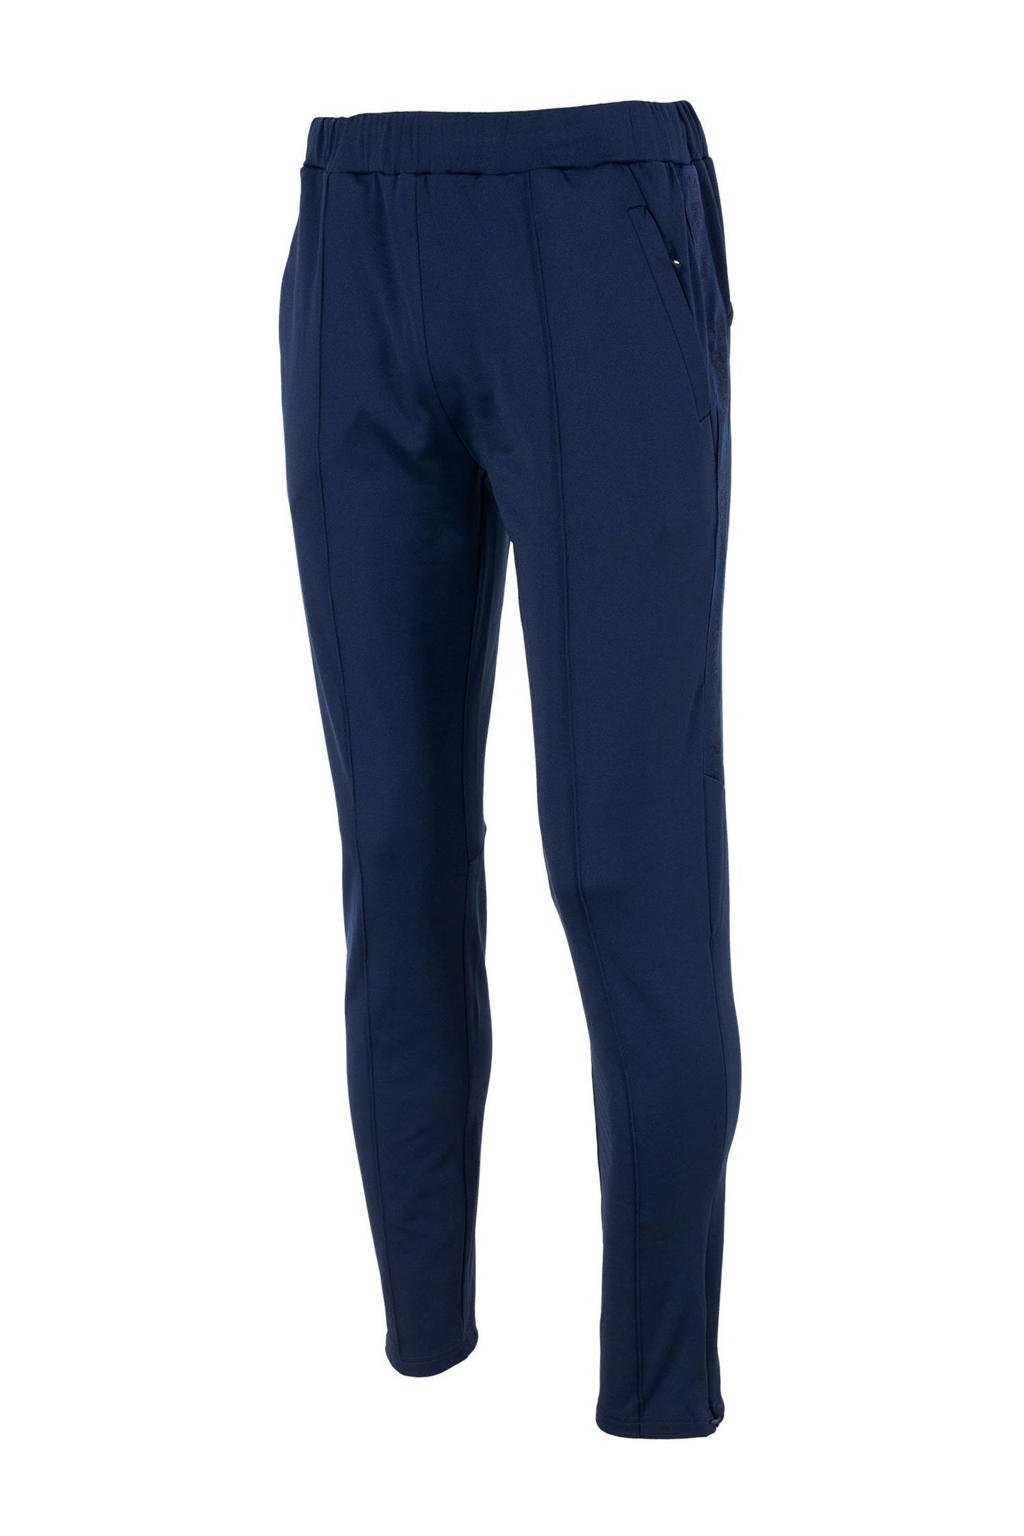 Donkerblauwe unisex Reece Australia trainingsbroek van polyester met regular fit, regular waist en logo dessin